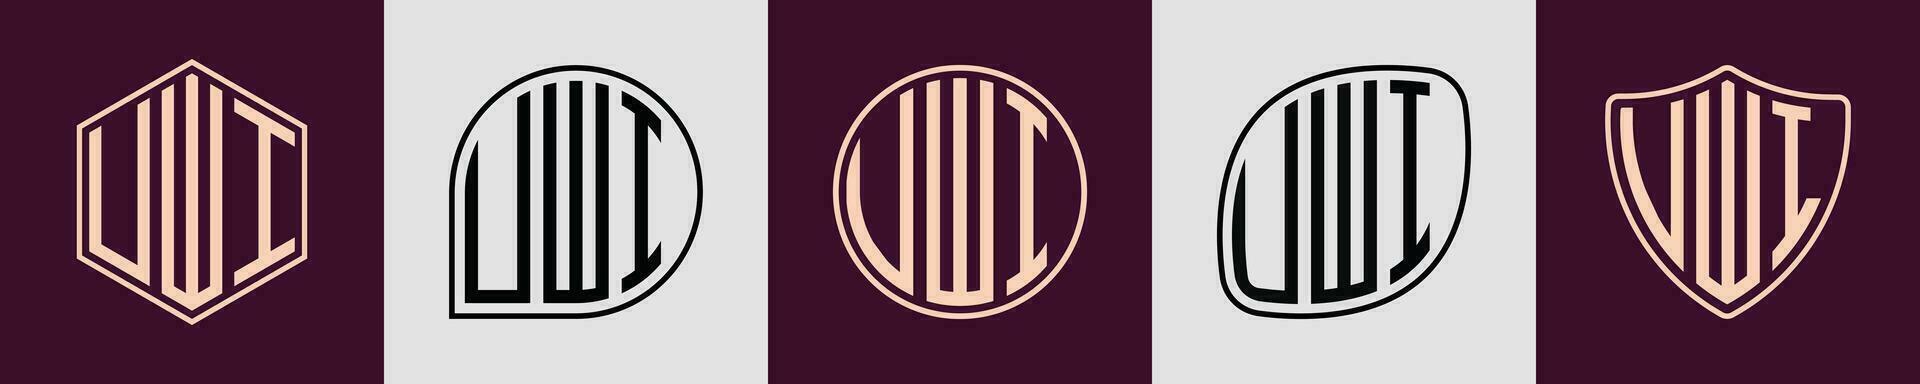 Creative simple Initial Monogram UWI Logo Designs. vector